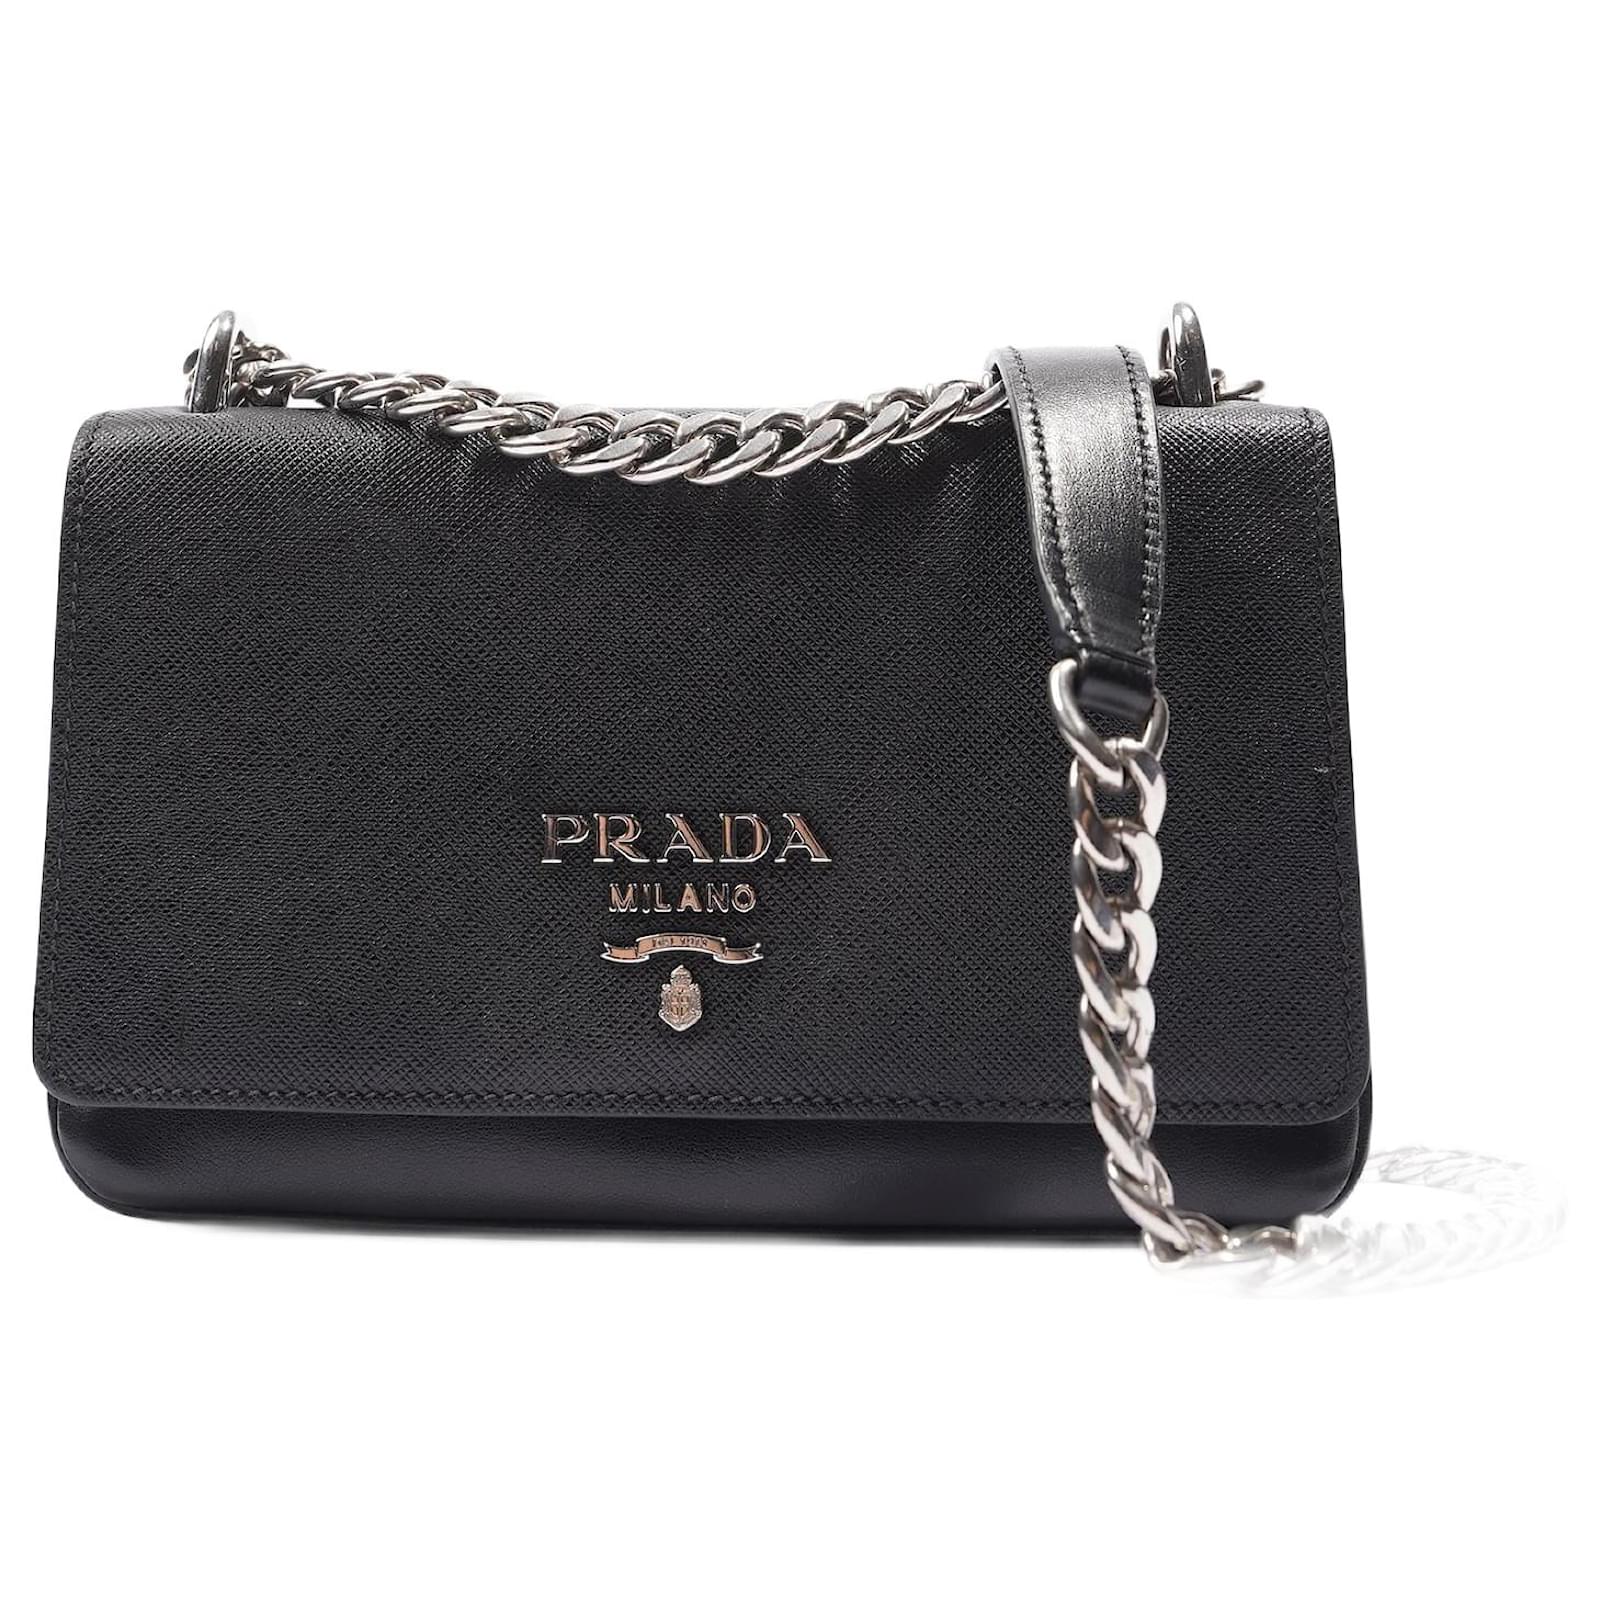 Prada Mini Bandoliera Leather Crossbody Bag in Black